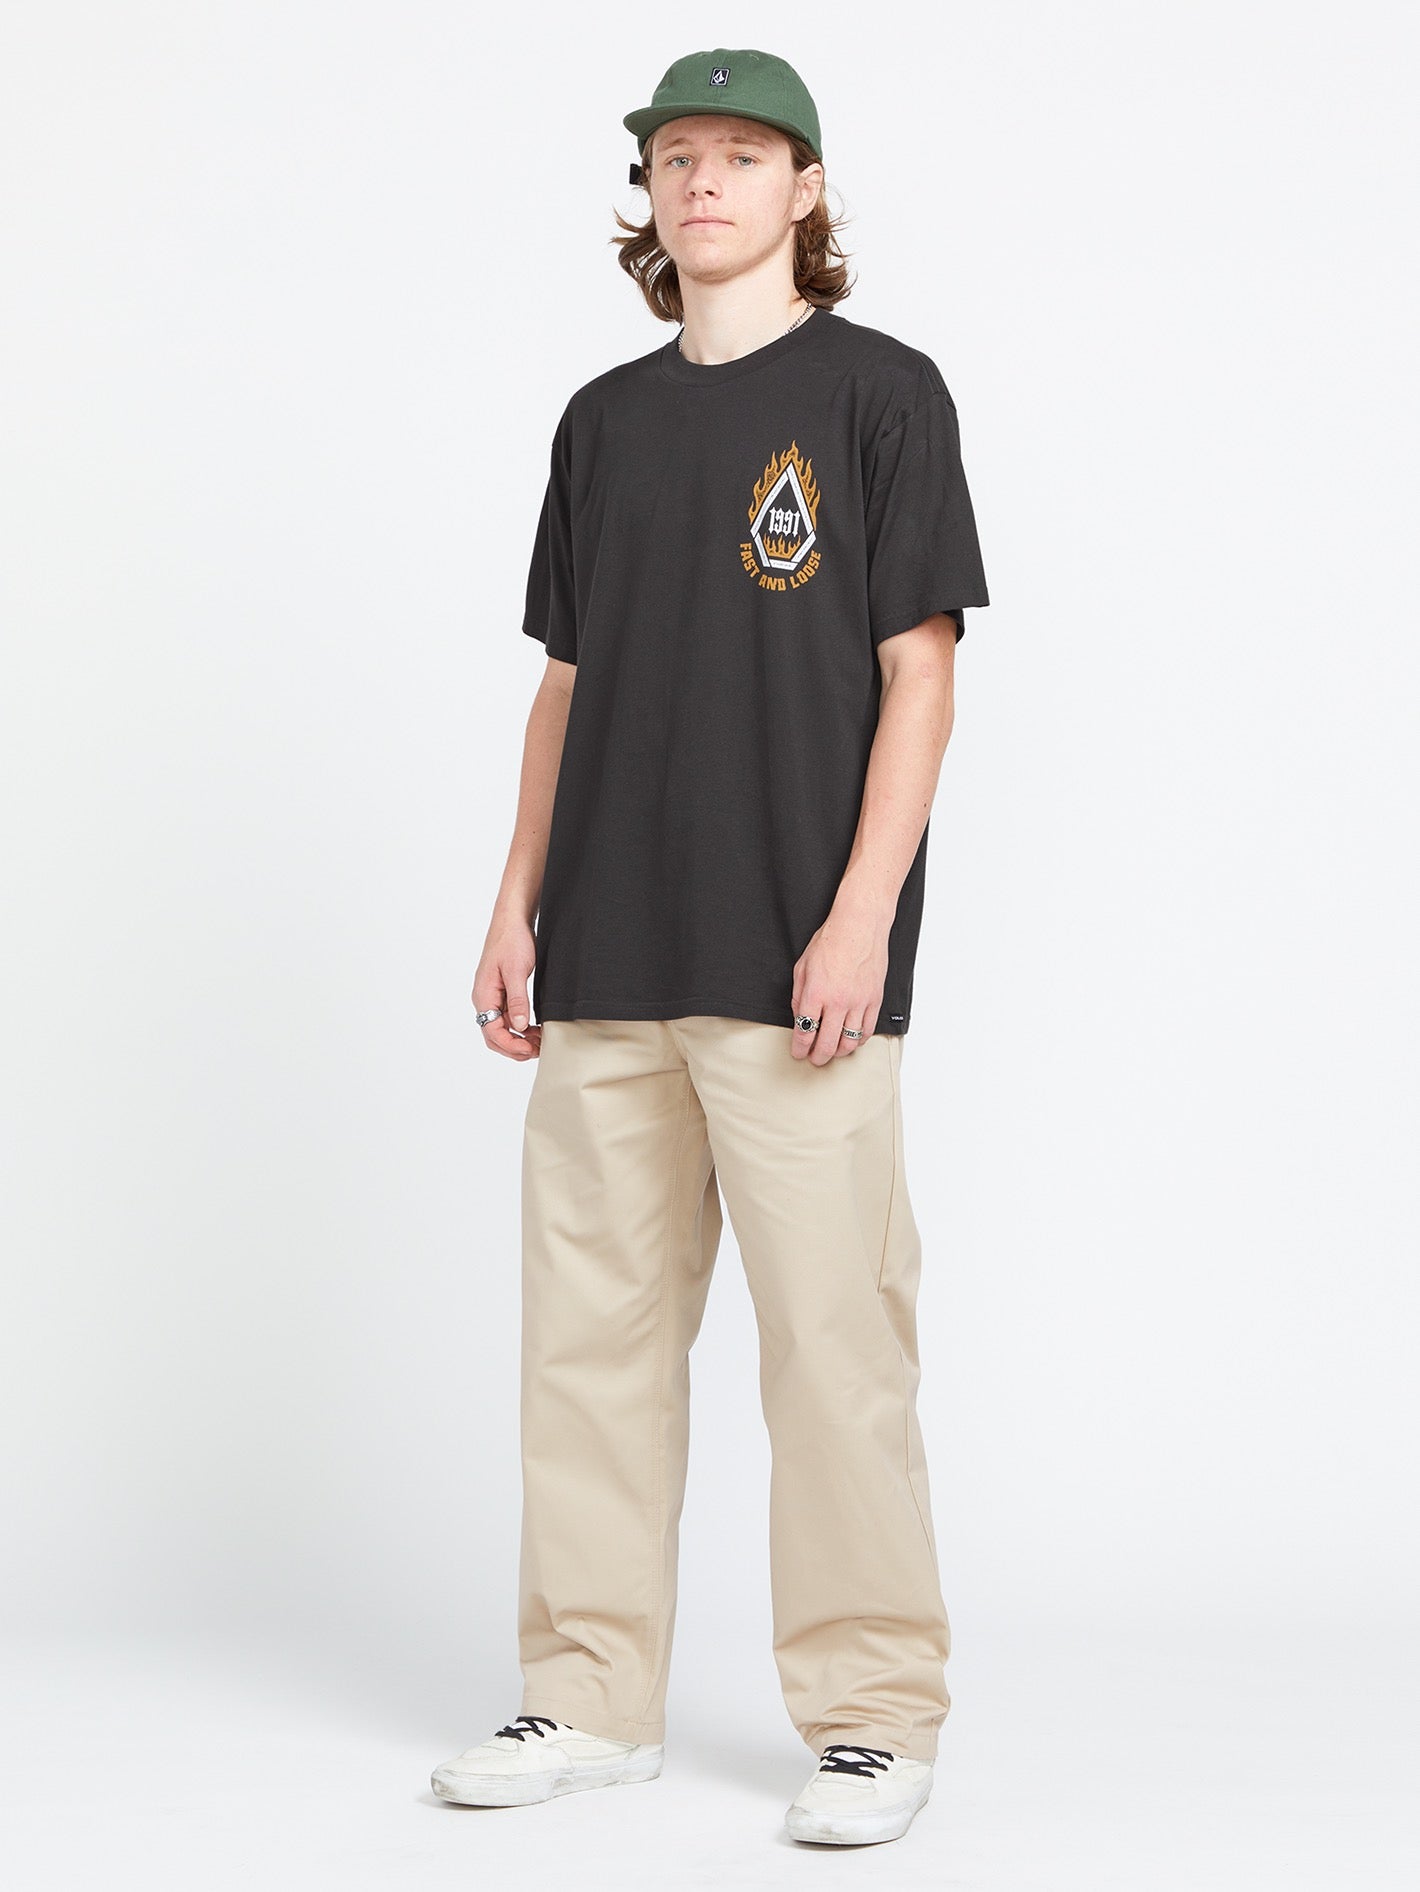 Hookups Skateboard Clockwork Orange Ultraviolence T-Shirt Unisex M L XL 2XL